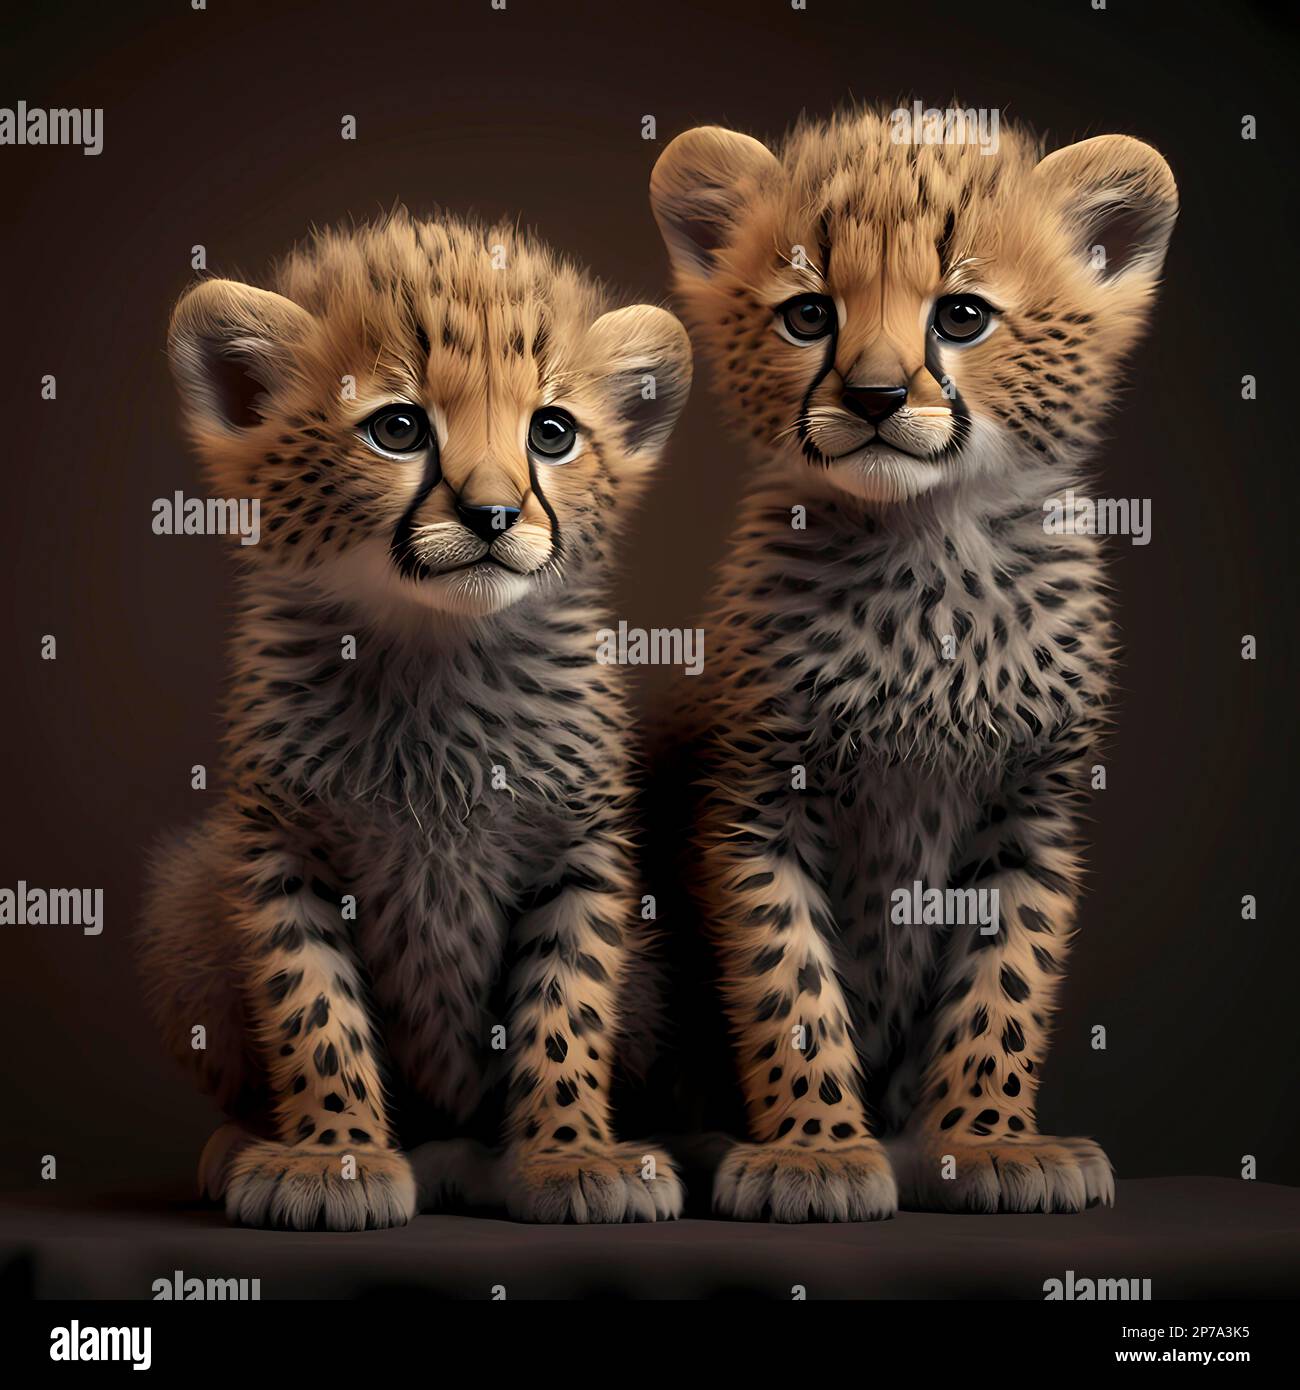 Cheetahs (Acinonyx jubatus) in front of black background, Ai generated Stock Photo